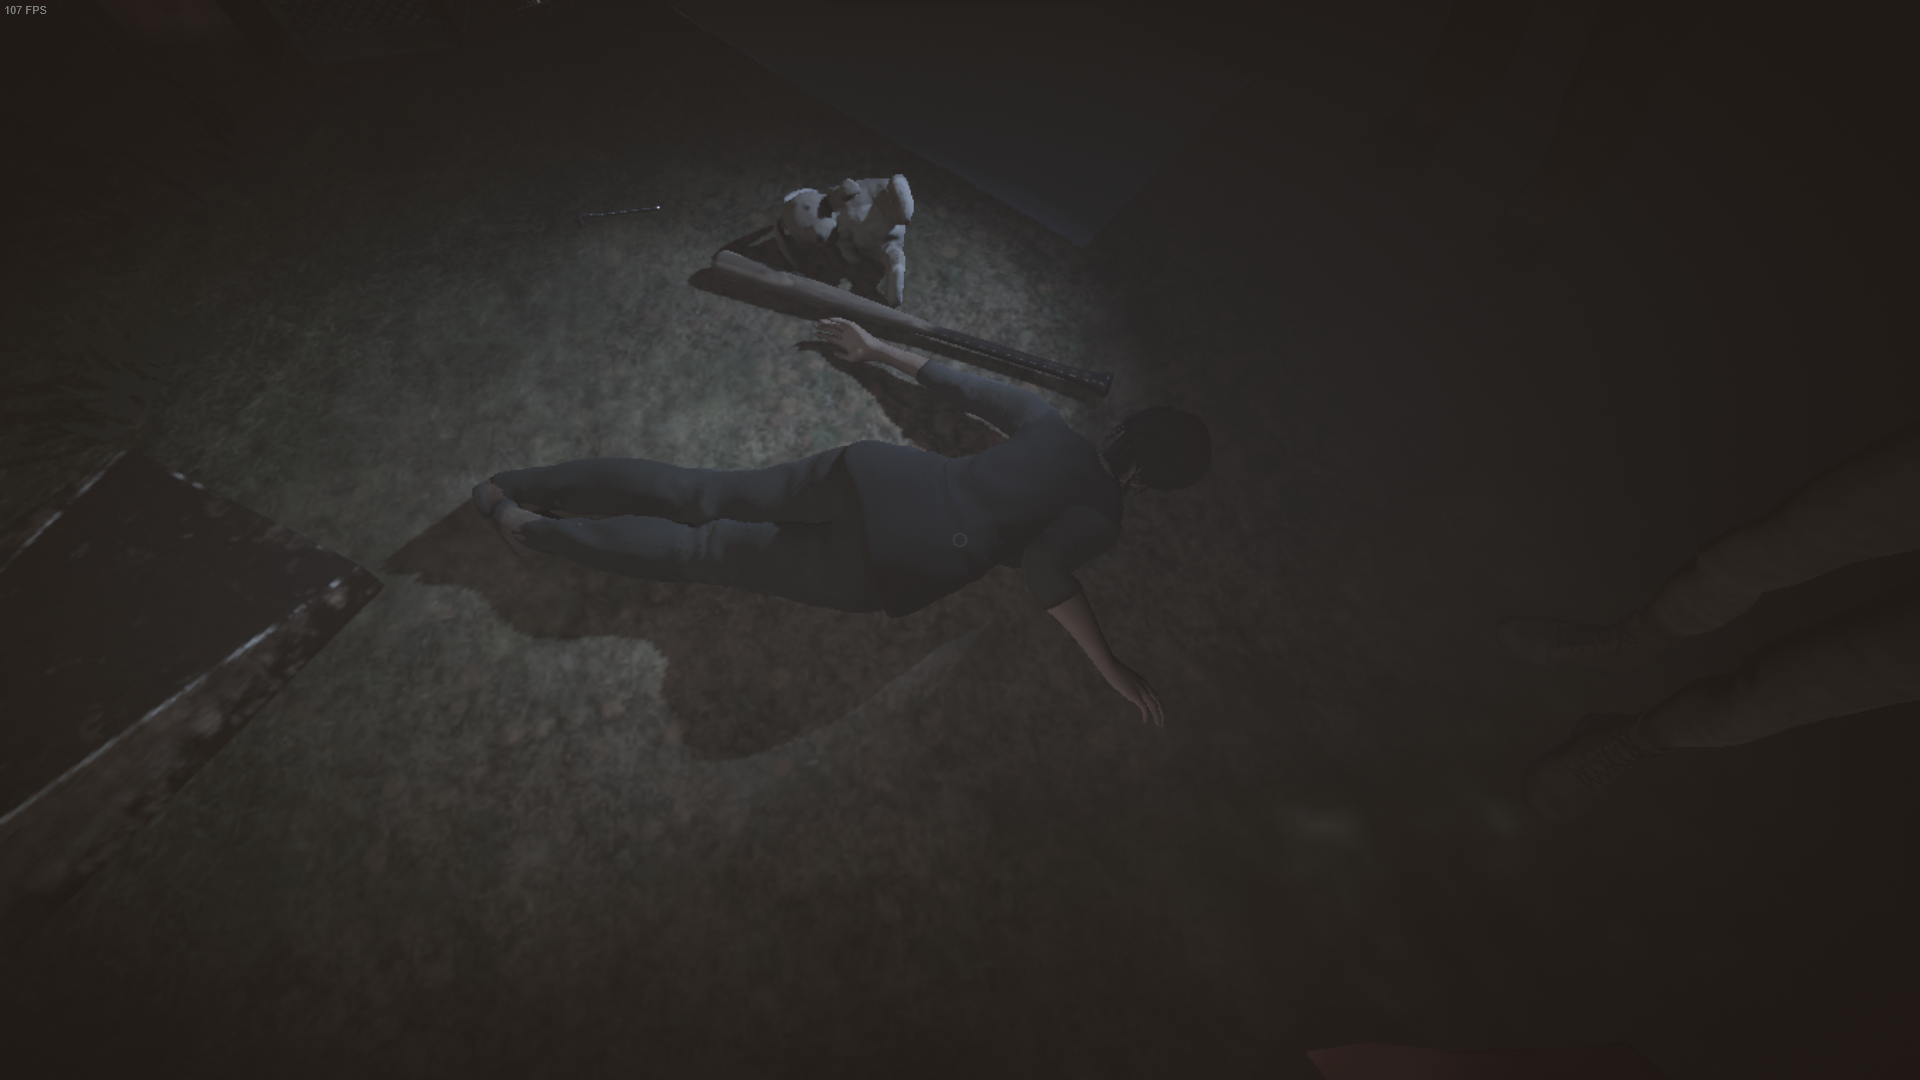 A dead player lying next to a bat